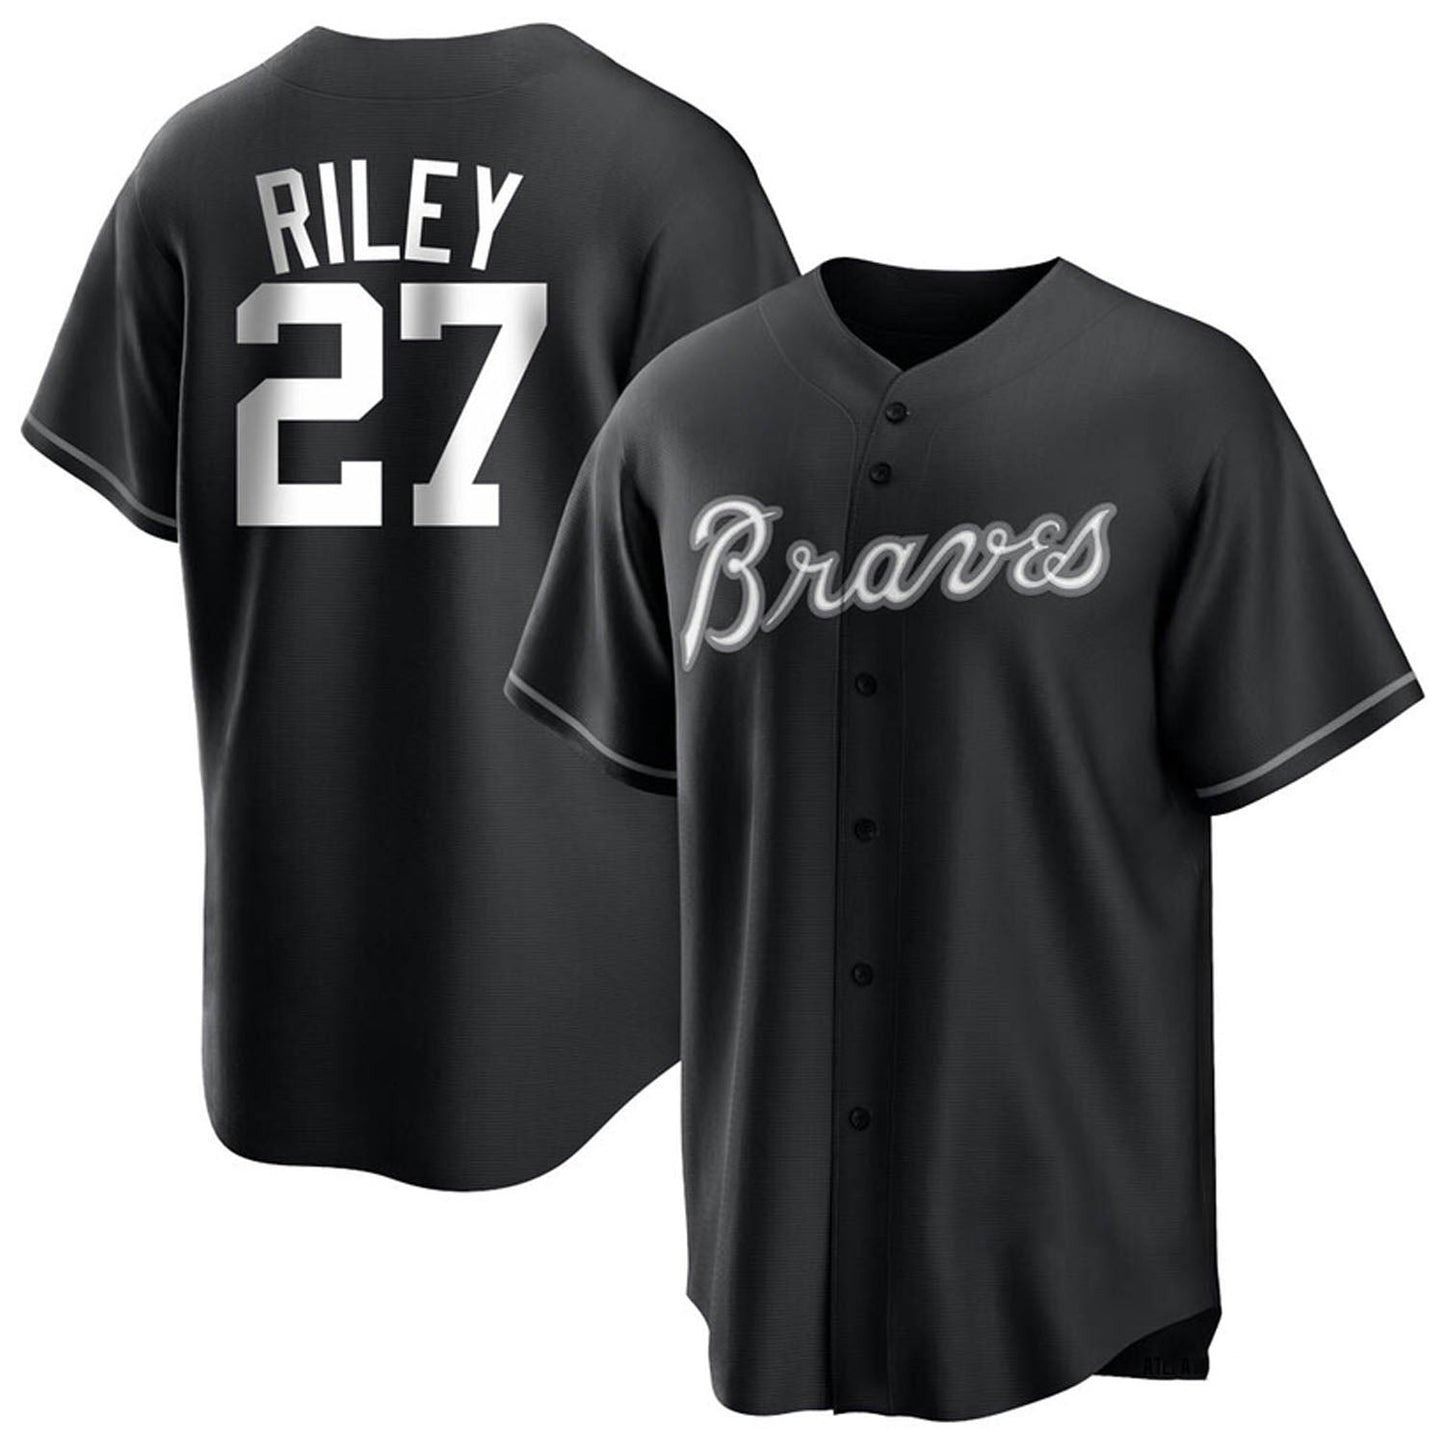 MLB Austin Riley Atlanta Braves 27 Jersey